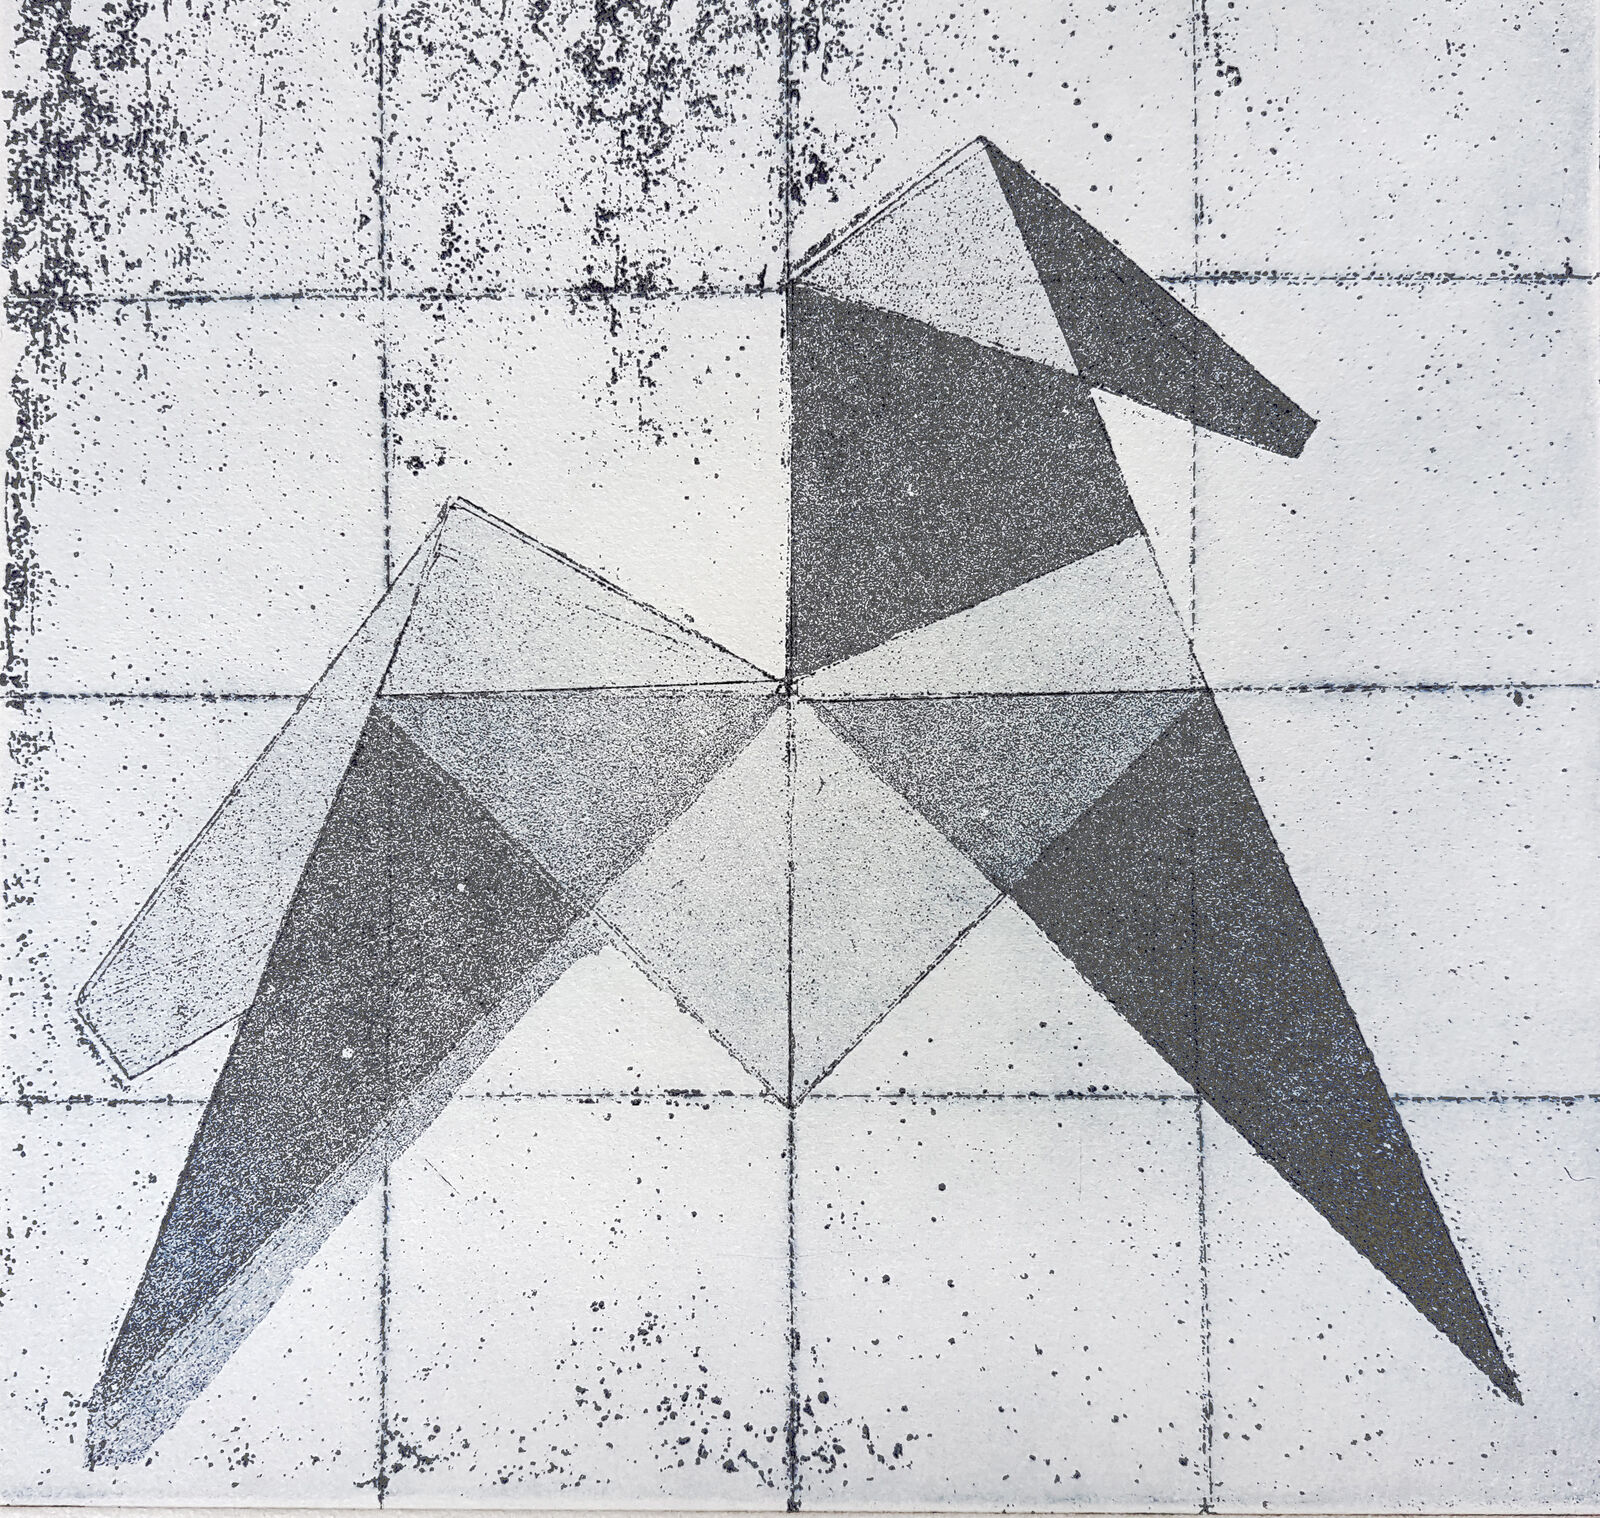 Origami Pferd, Aquatinta-Radierung und vernis mou, 27 x 39 cm, 2018 © Agnes Christine Katschner